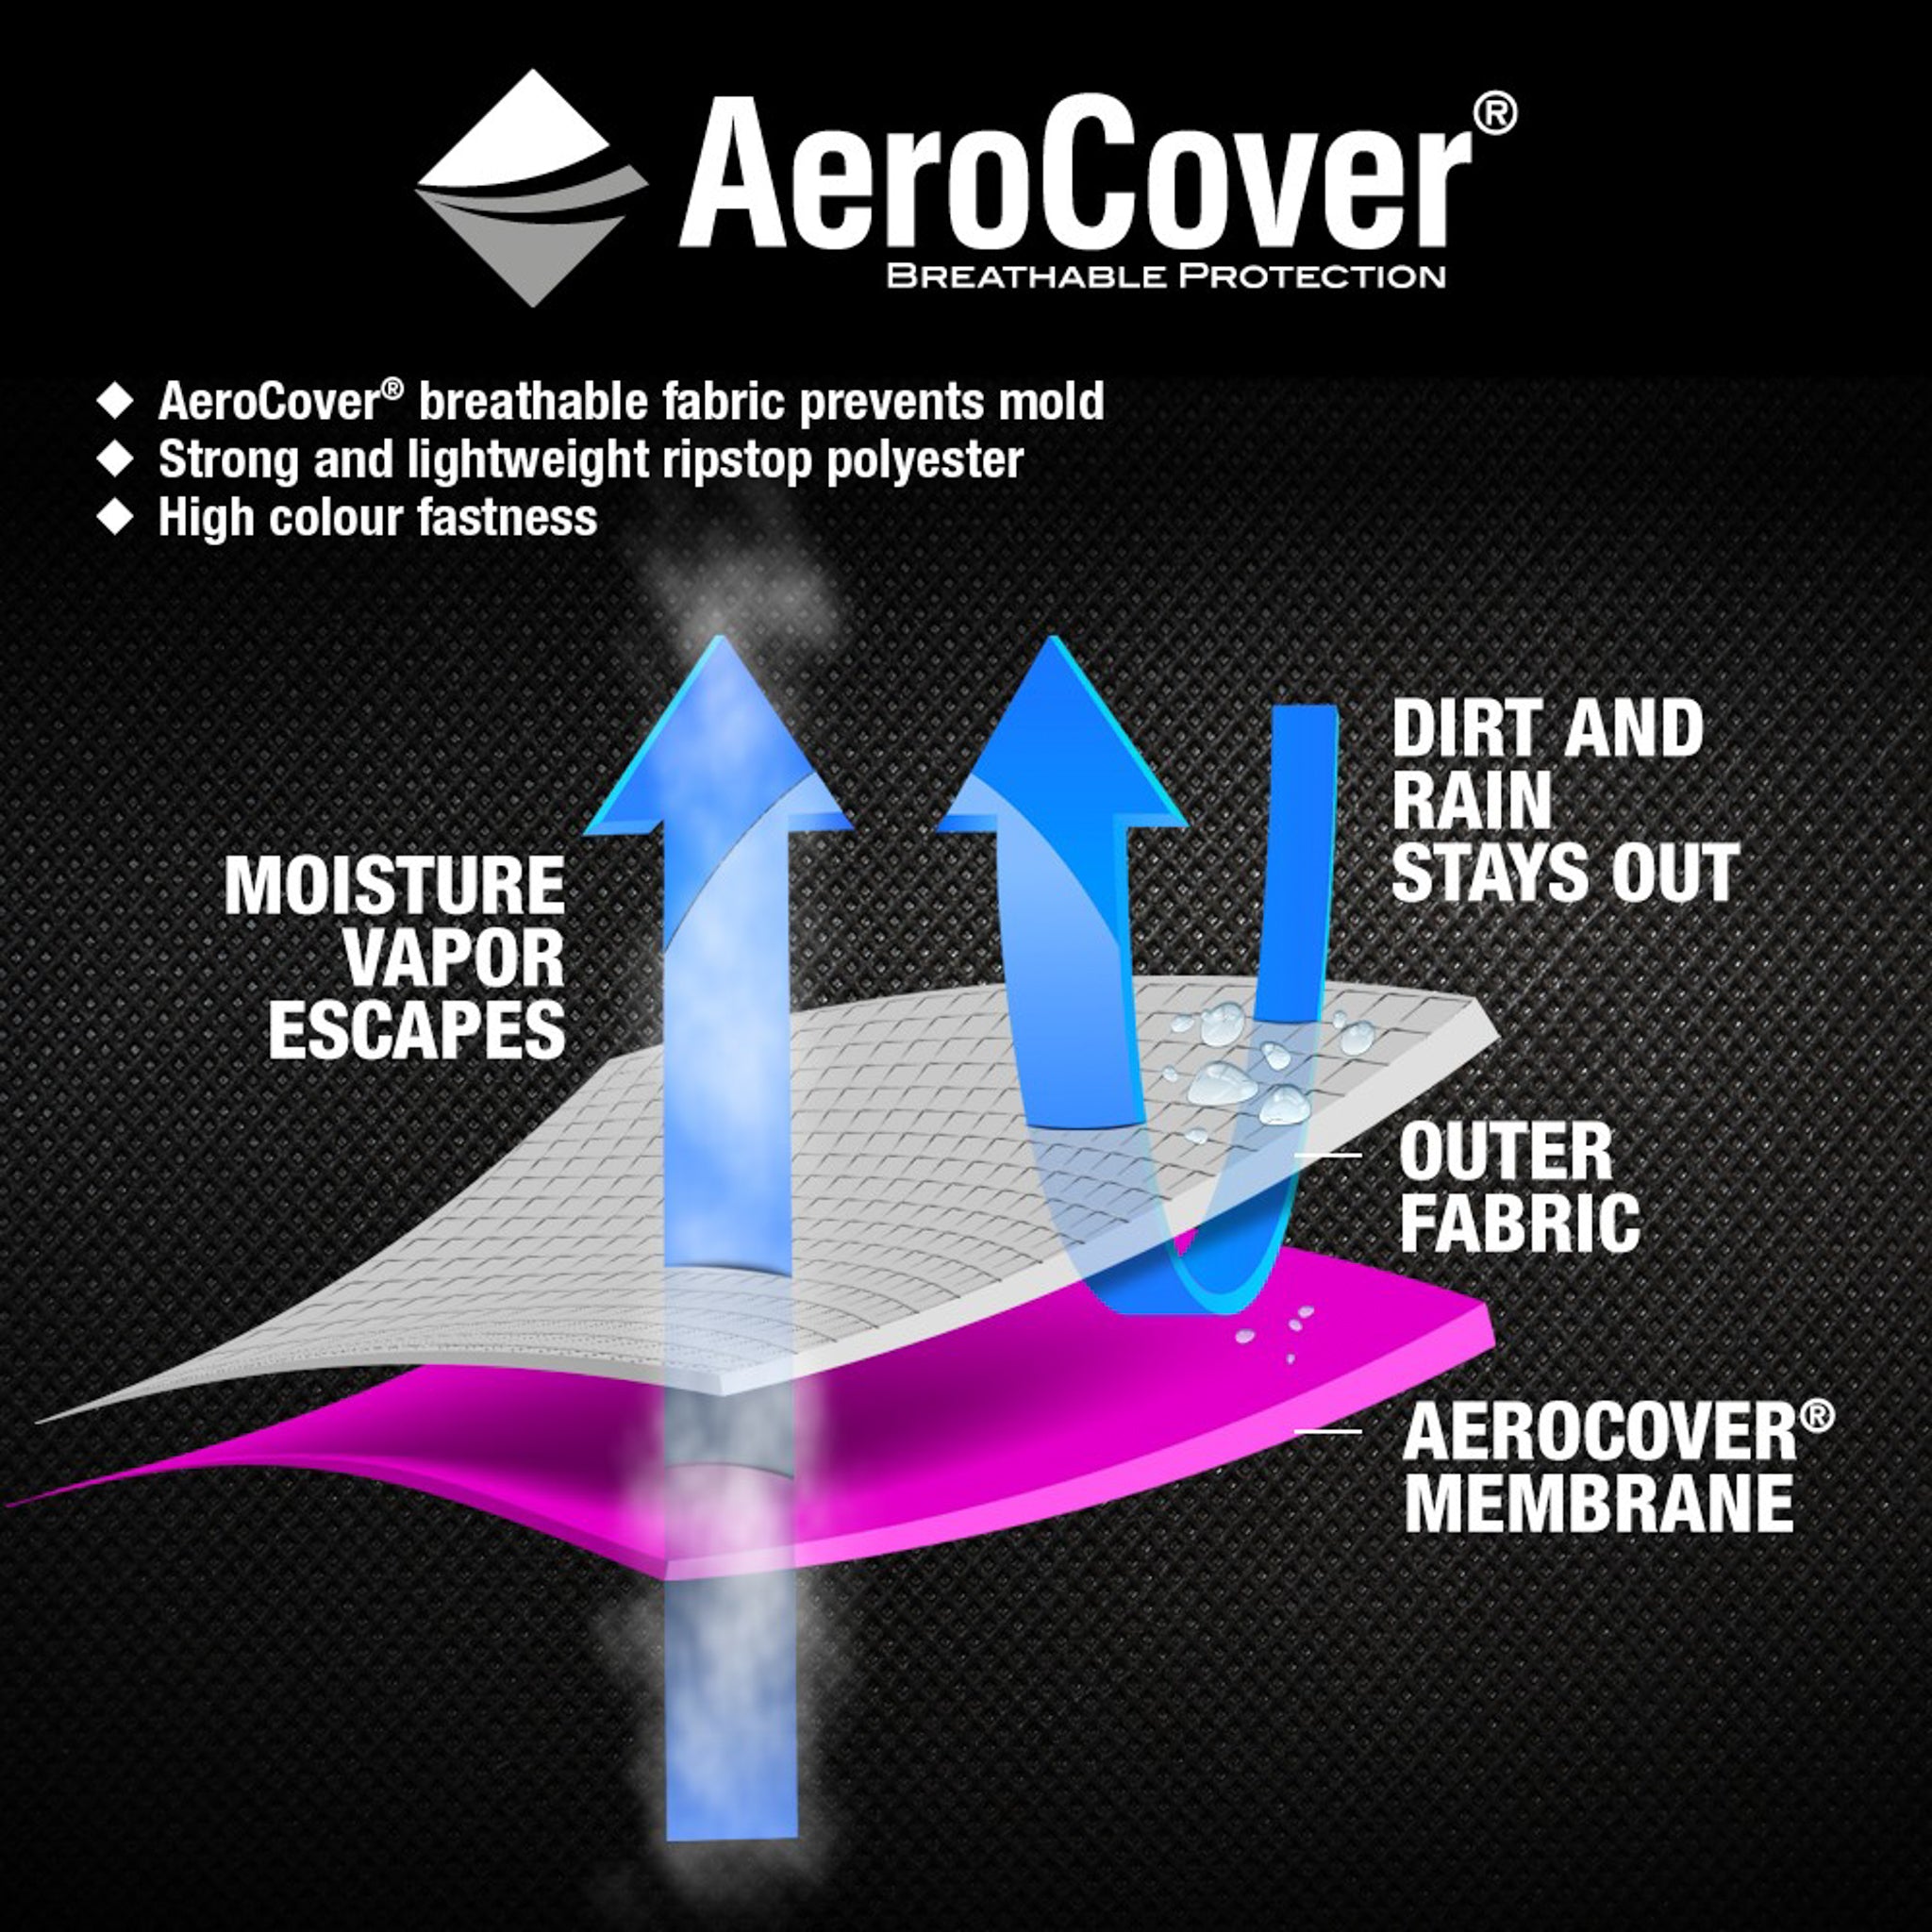 AeroCover - L-Shape Lounge Set Cover 255 x 255 x 100 x 70